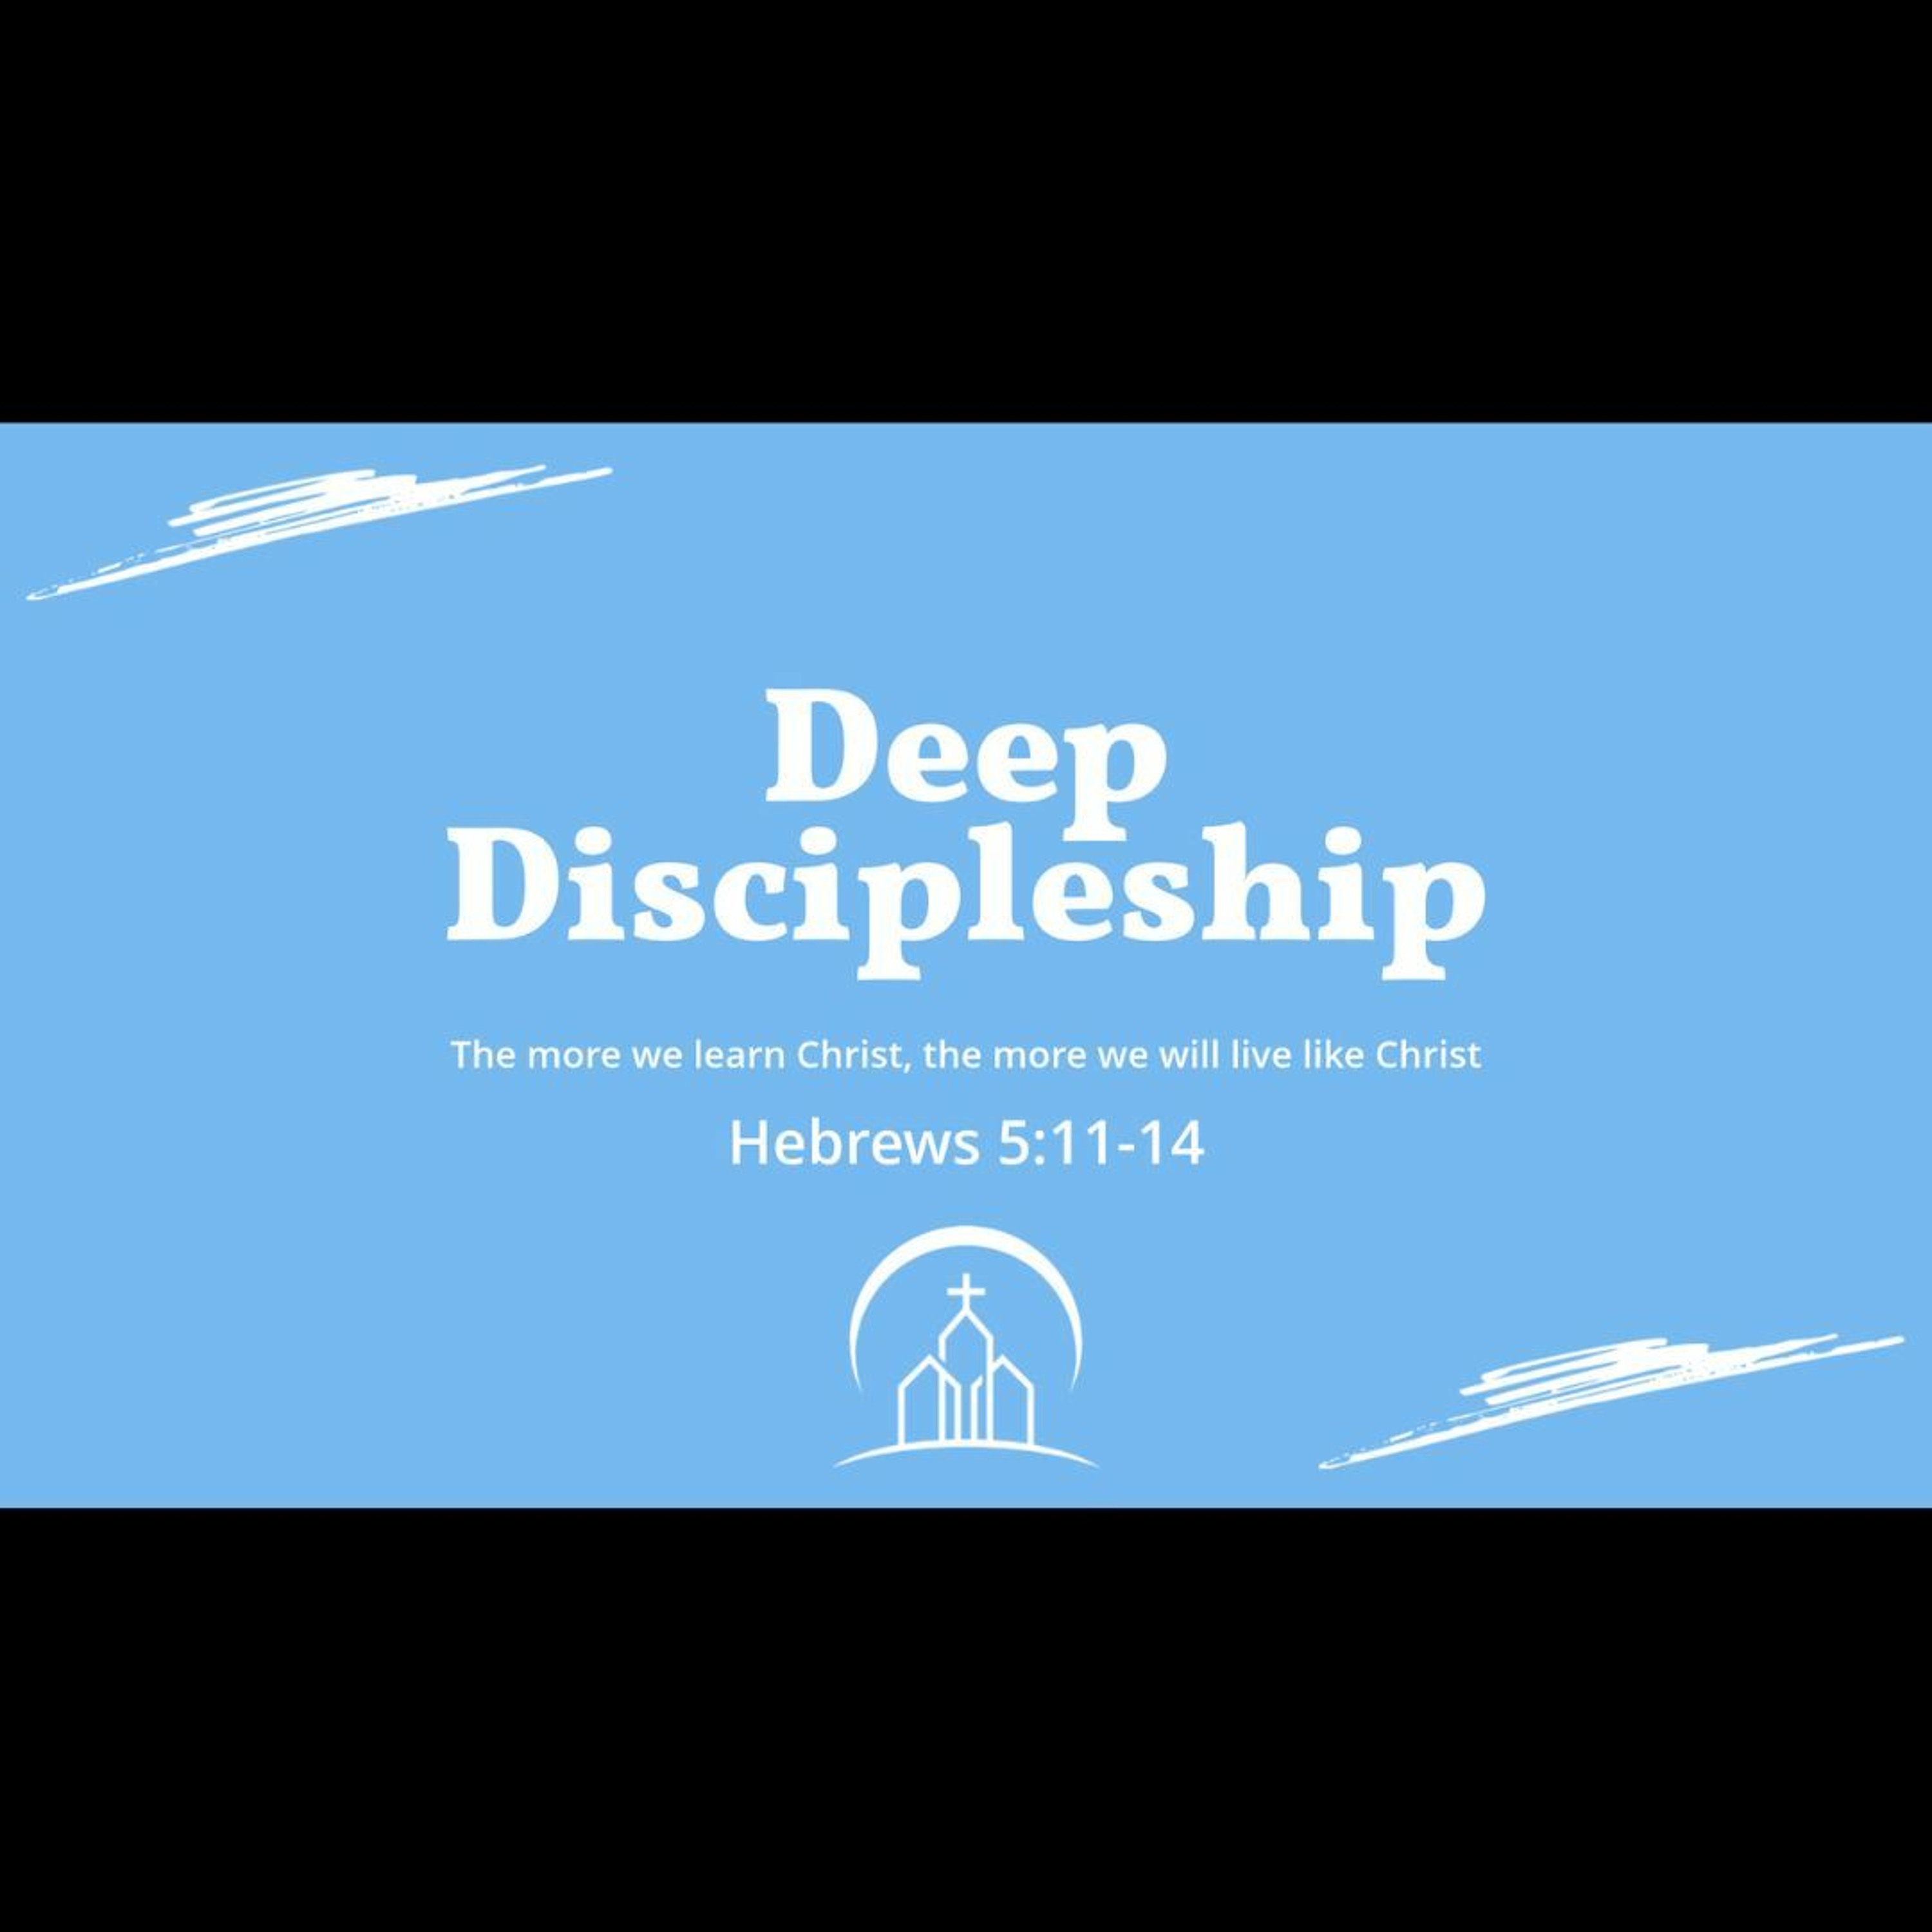 Deep Discipleship (Hebrews 5:11-14)